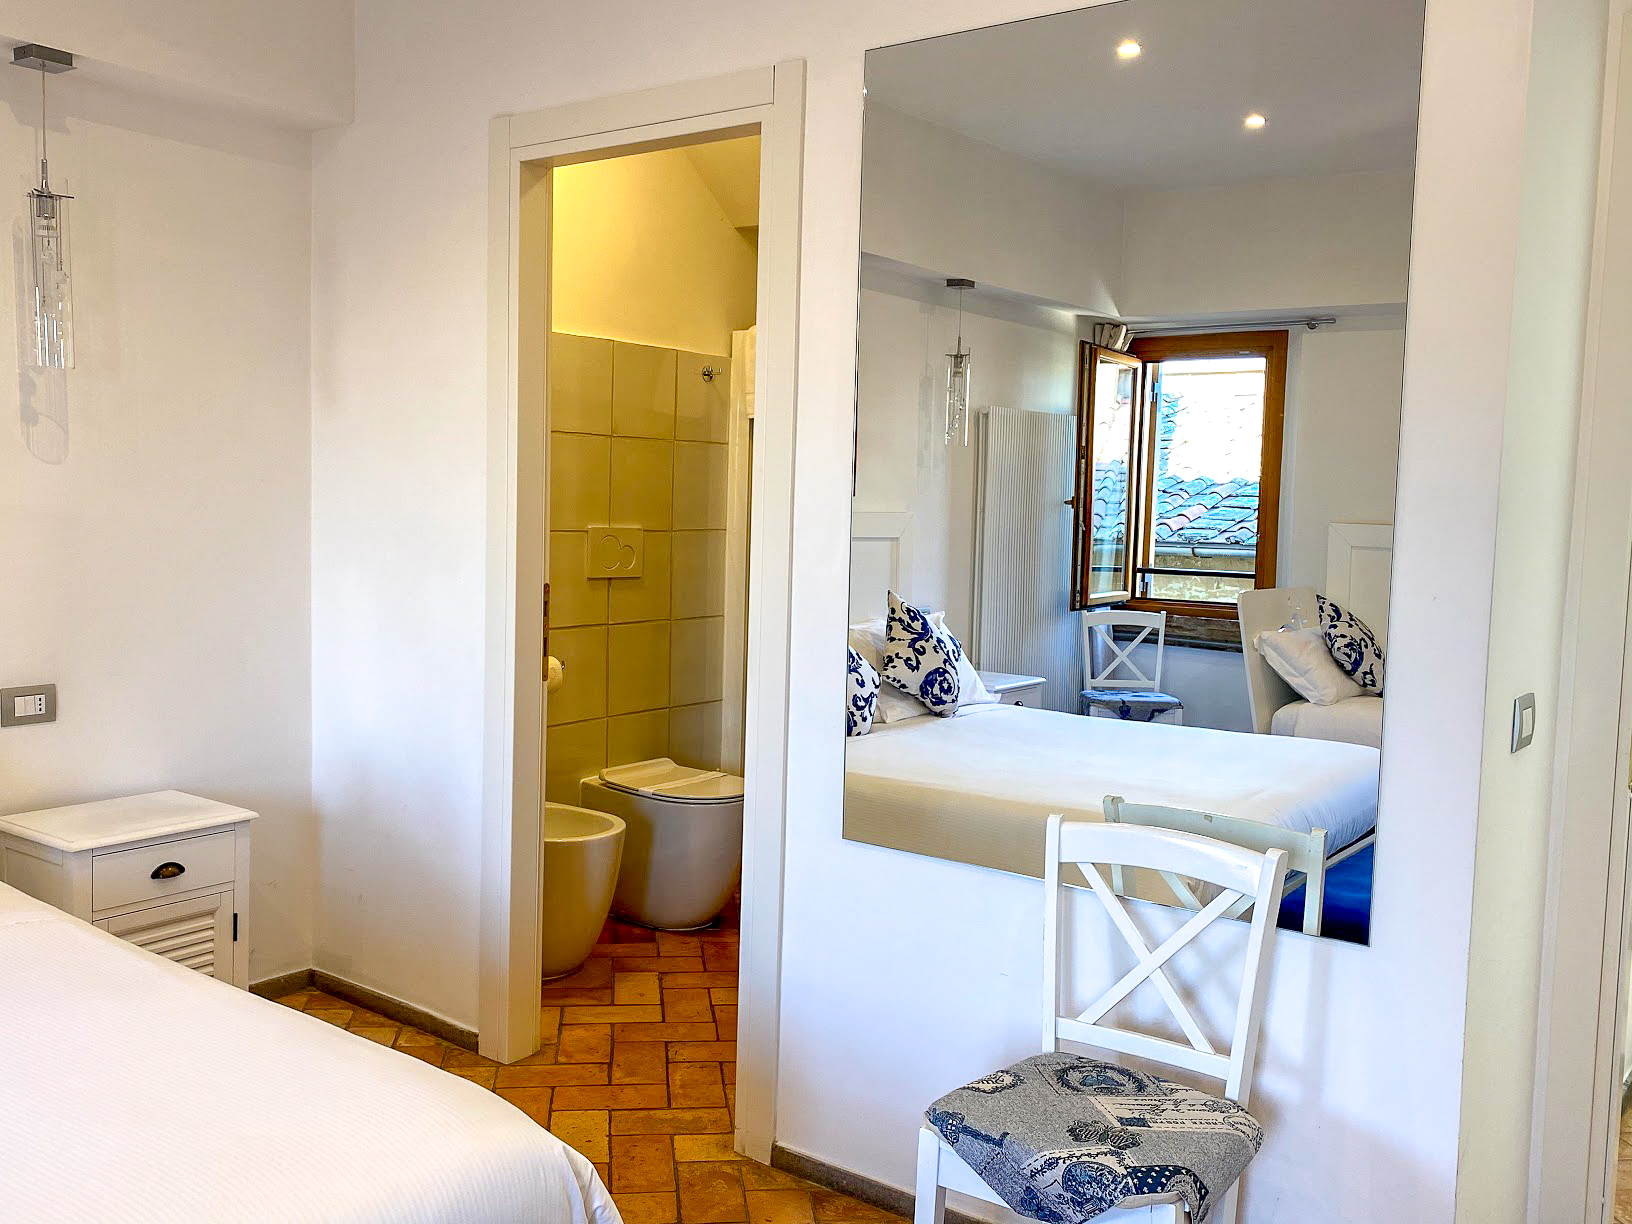 white walls in the bedroom and bathroom in Atlantis Inn B&B, Castel Gandolfo, Italy